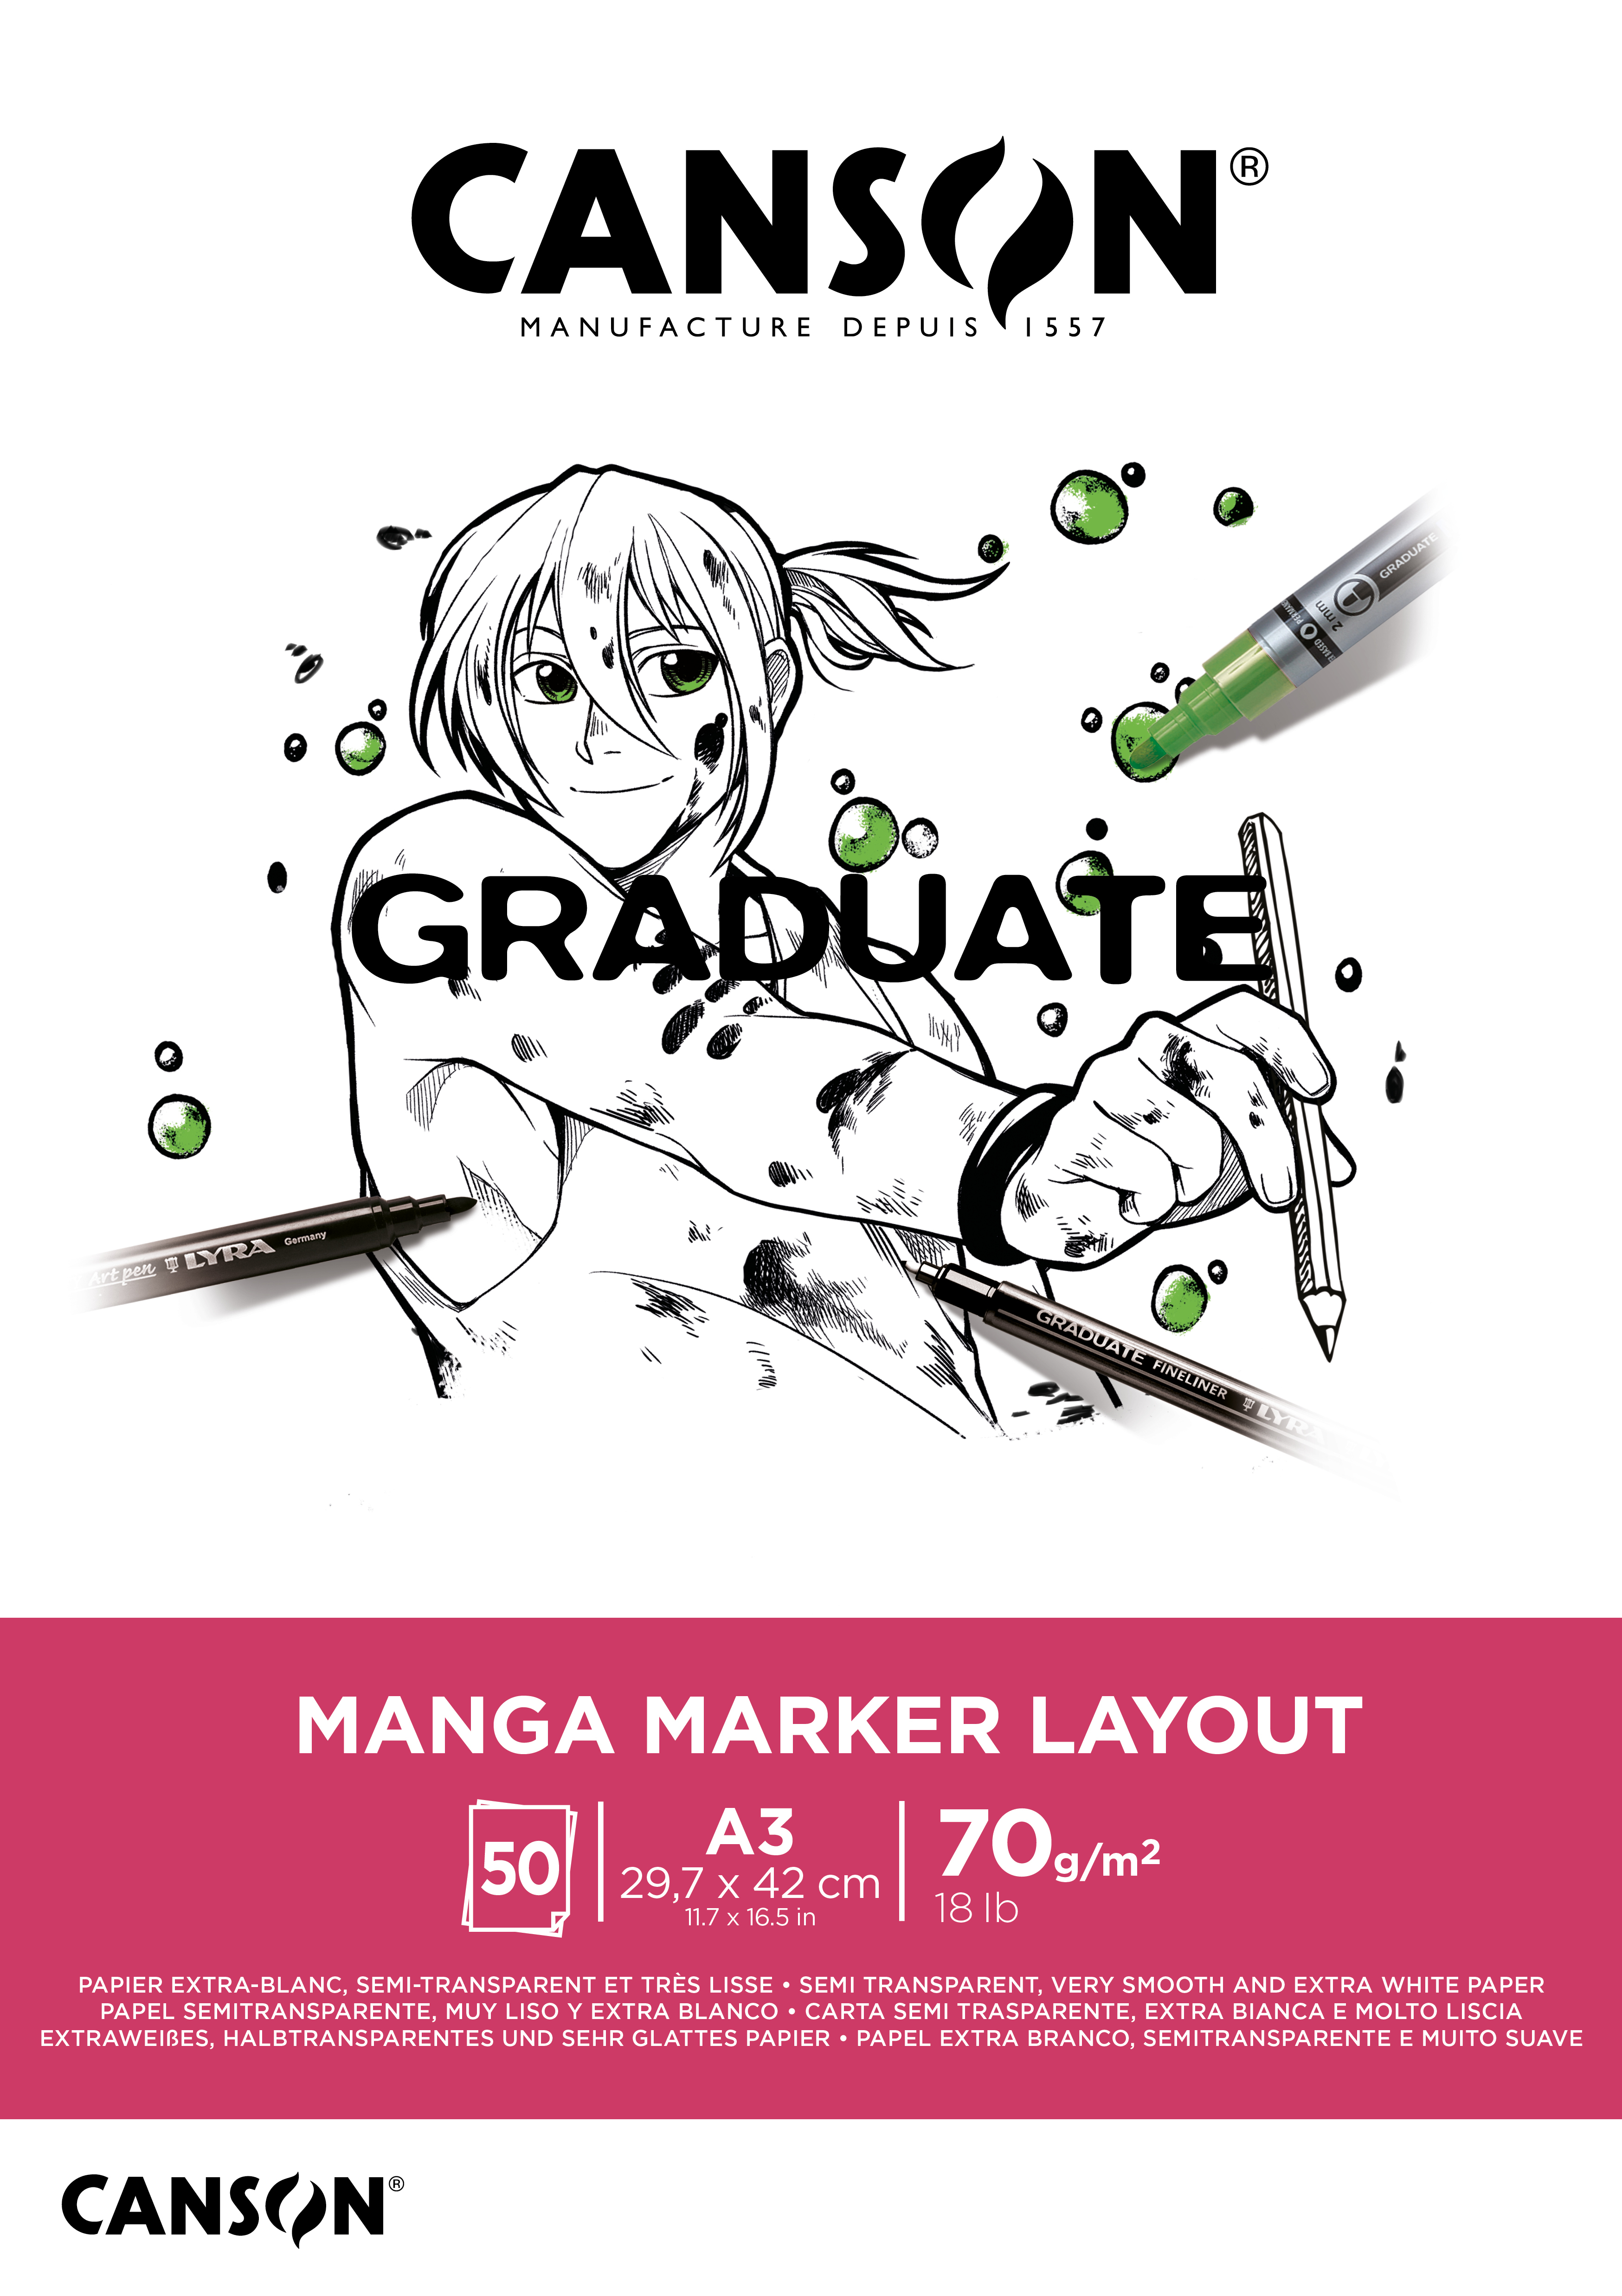 CANSON Graduate Manga Marker A3 31250P025 50 flles, blance, 70g